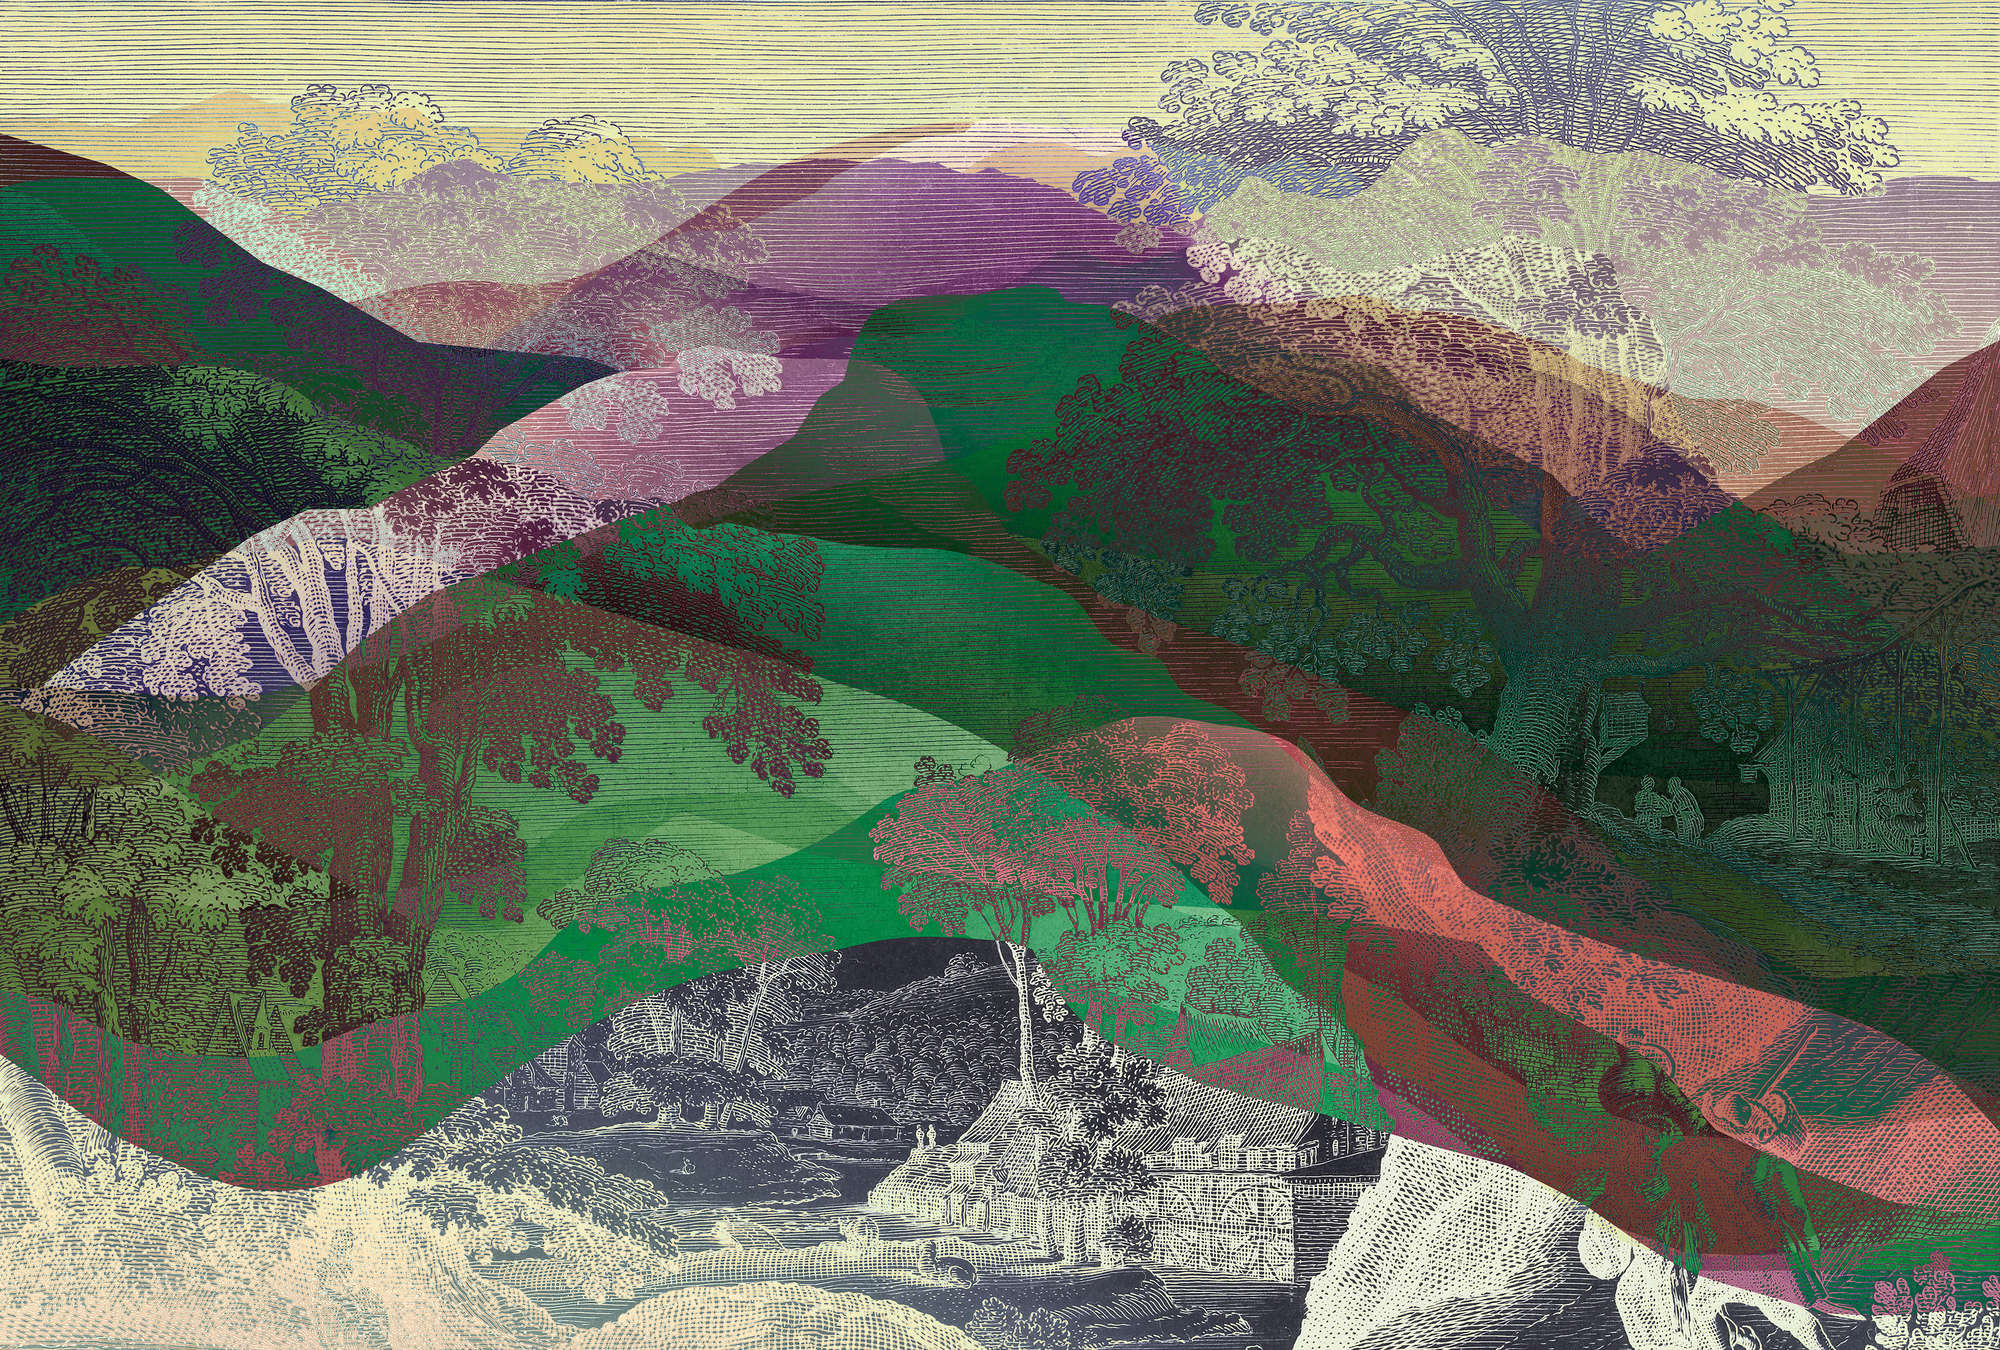             Hidden Valley 1 - mural vintage meets modern mountain landscape
        